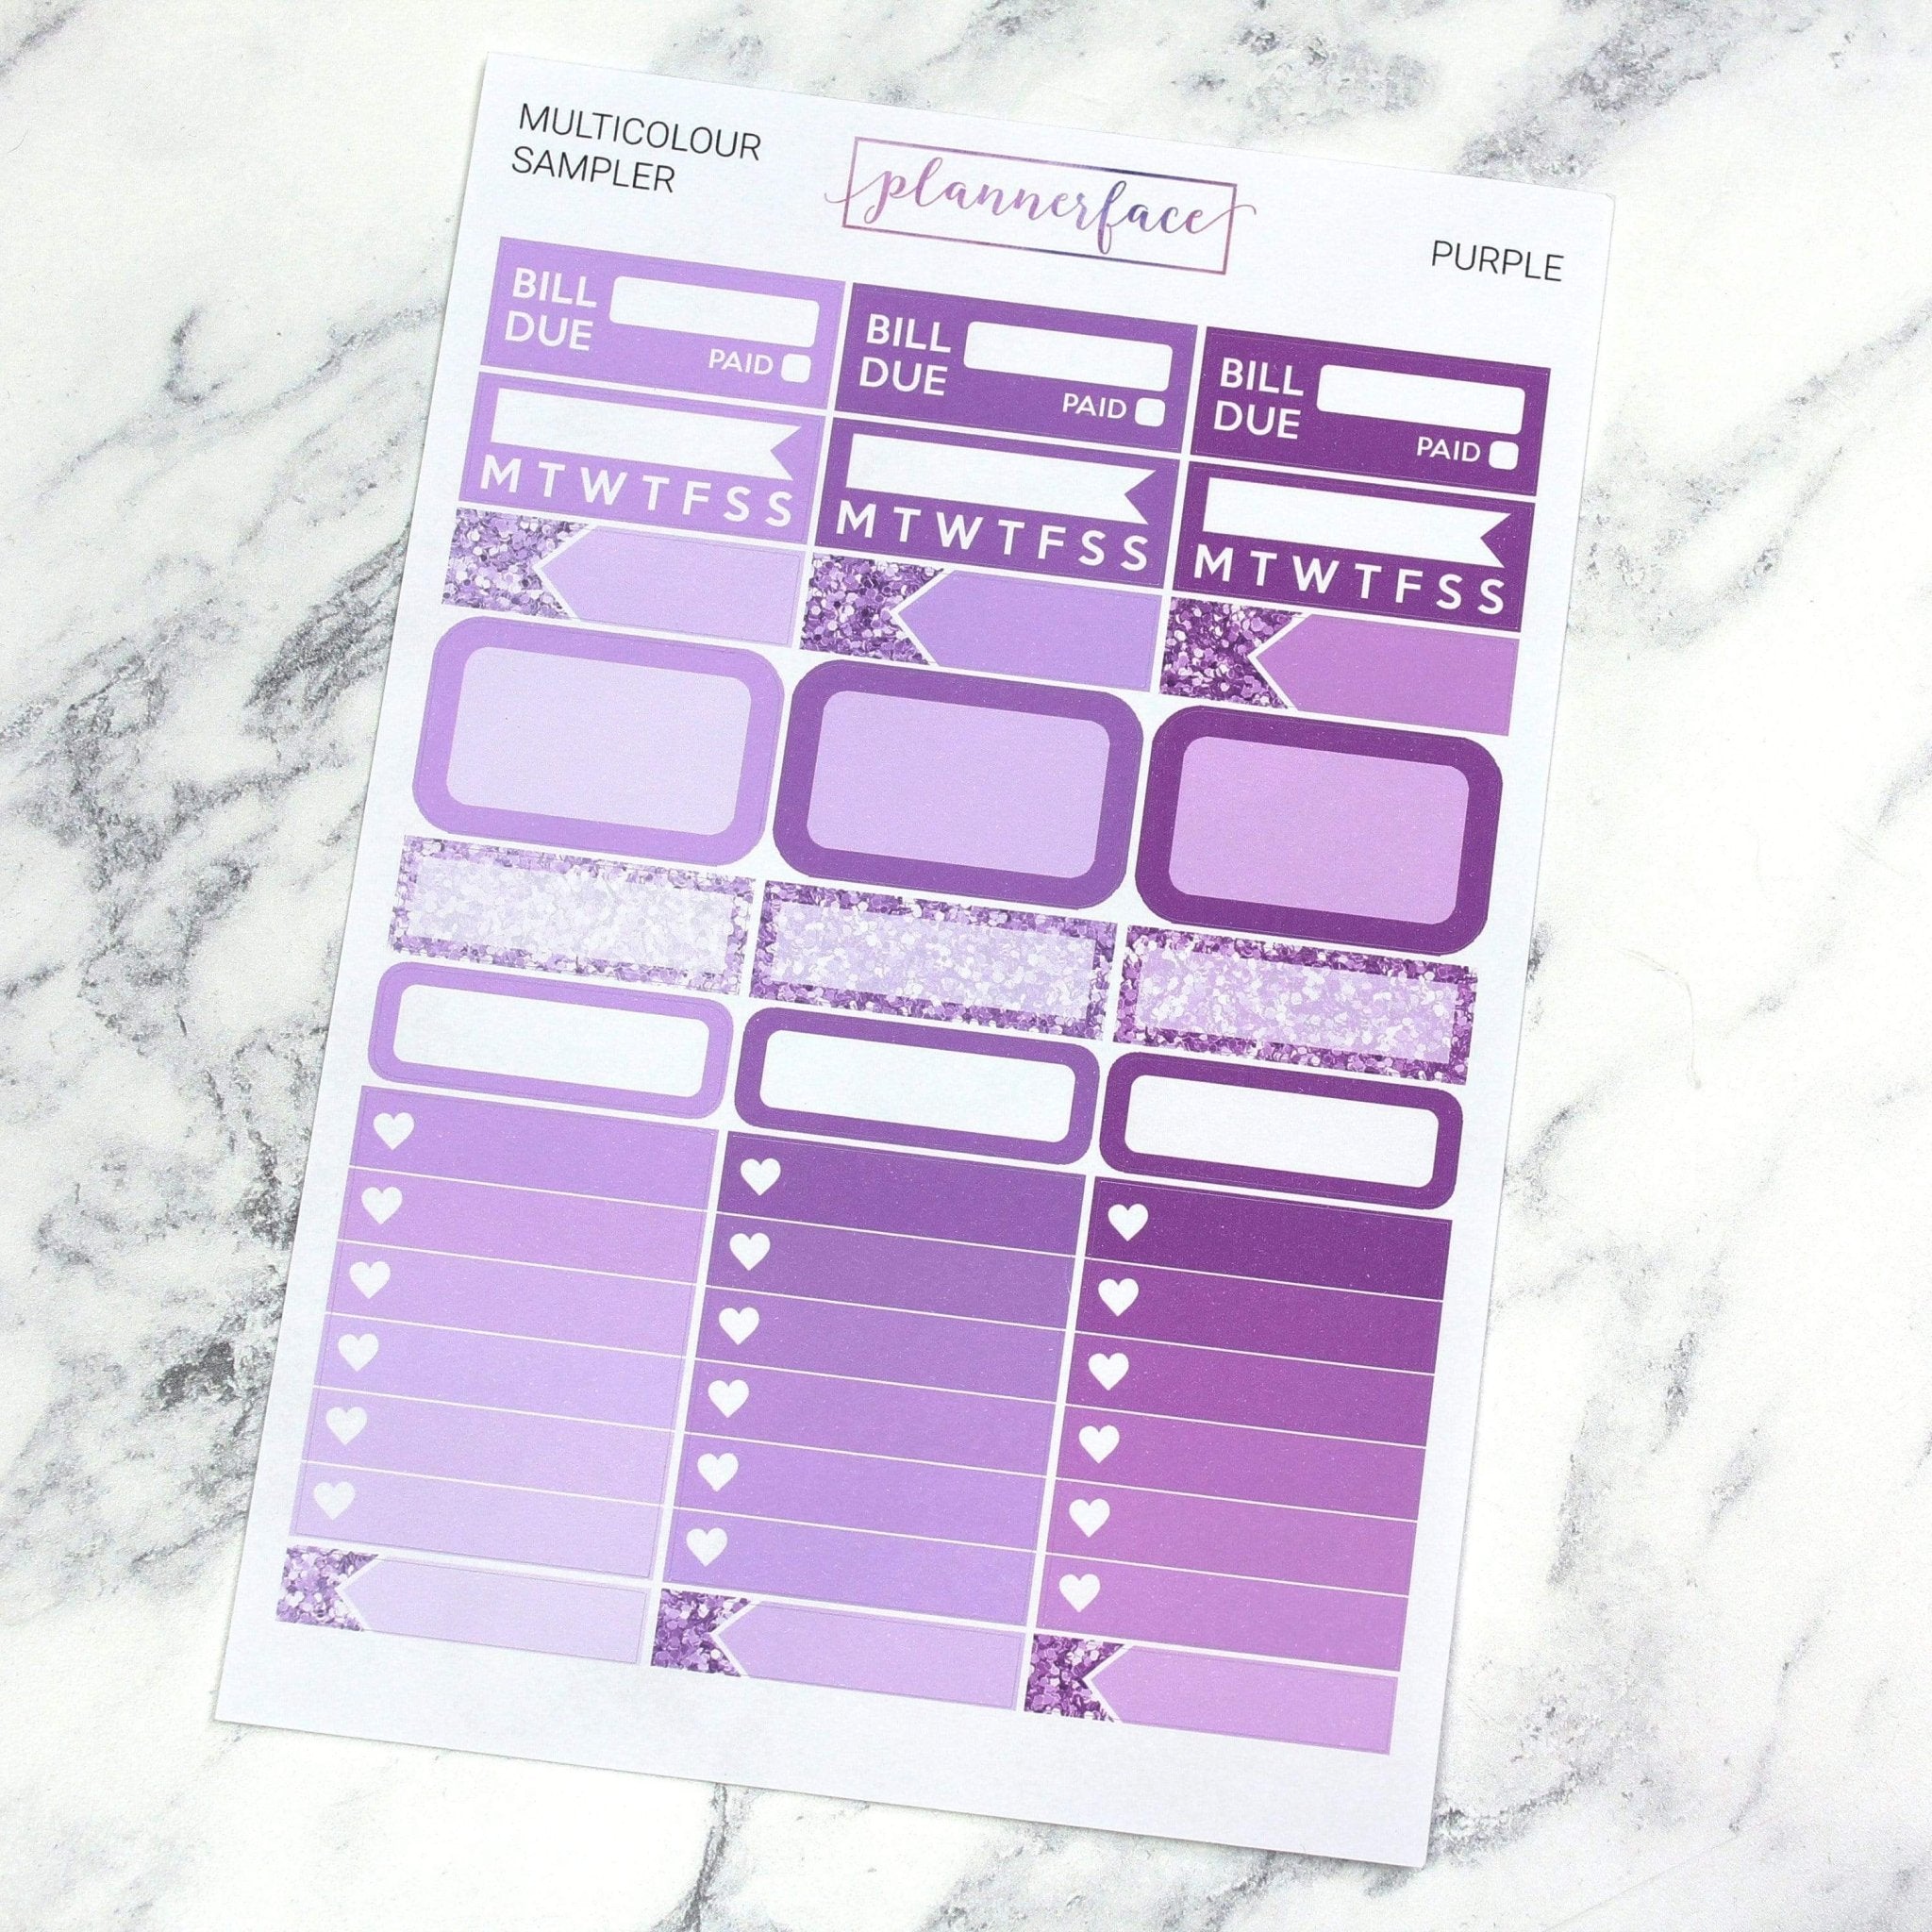 Purple Multicolour Sampler by Plannerface